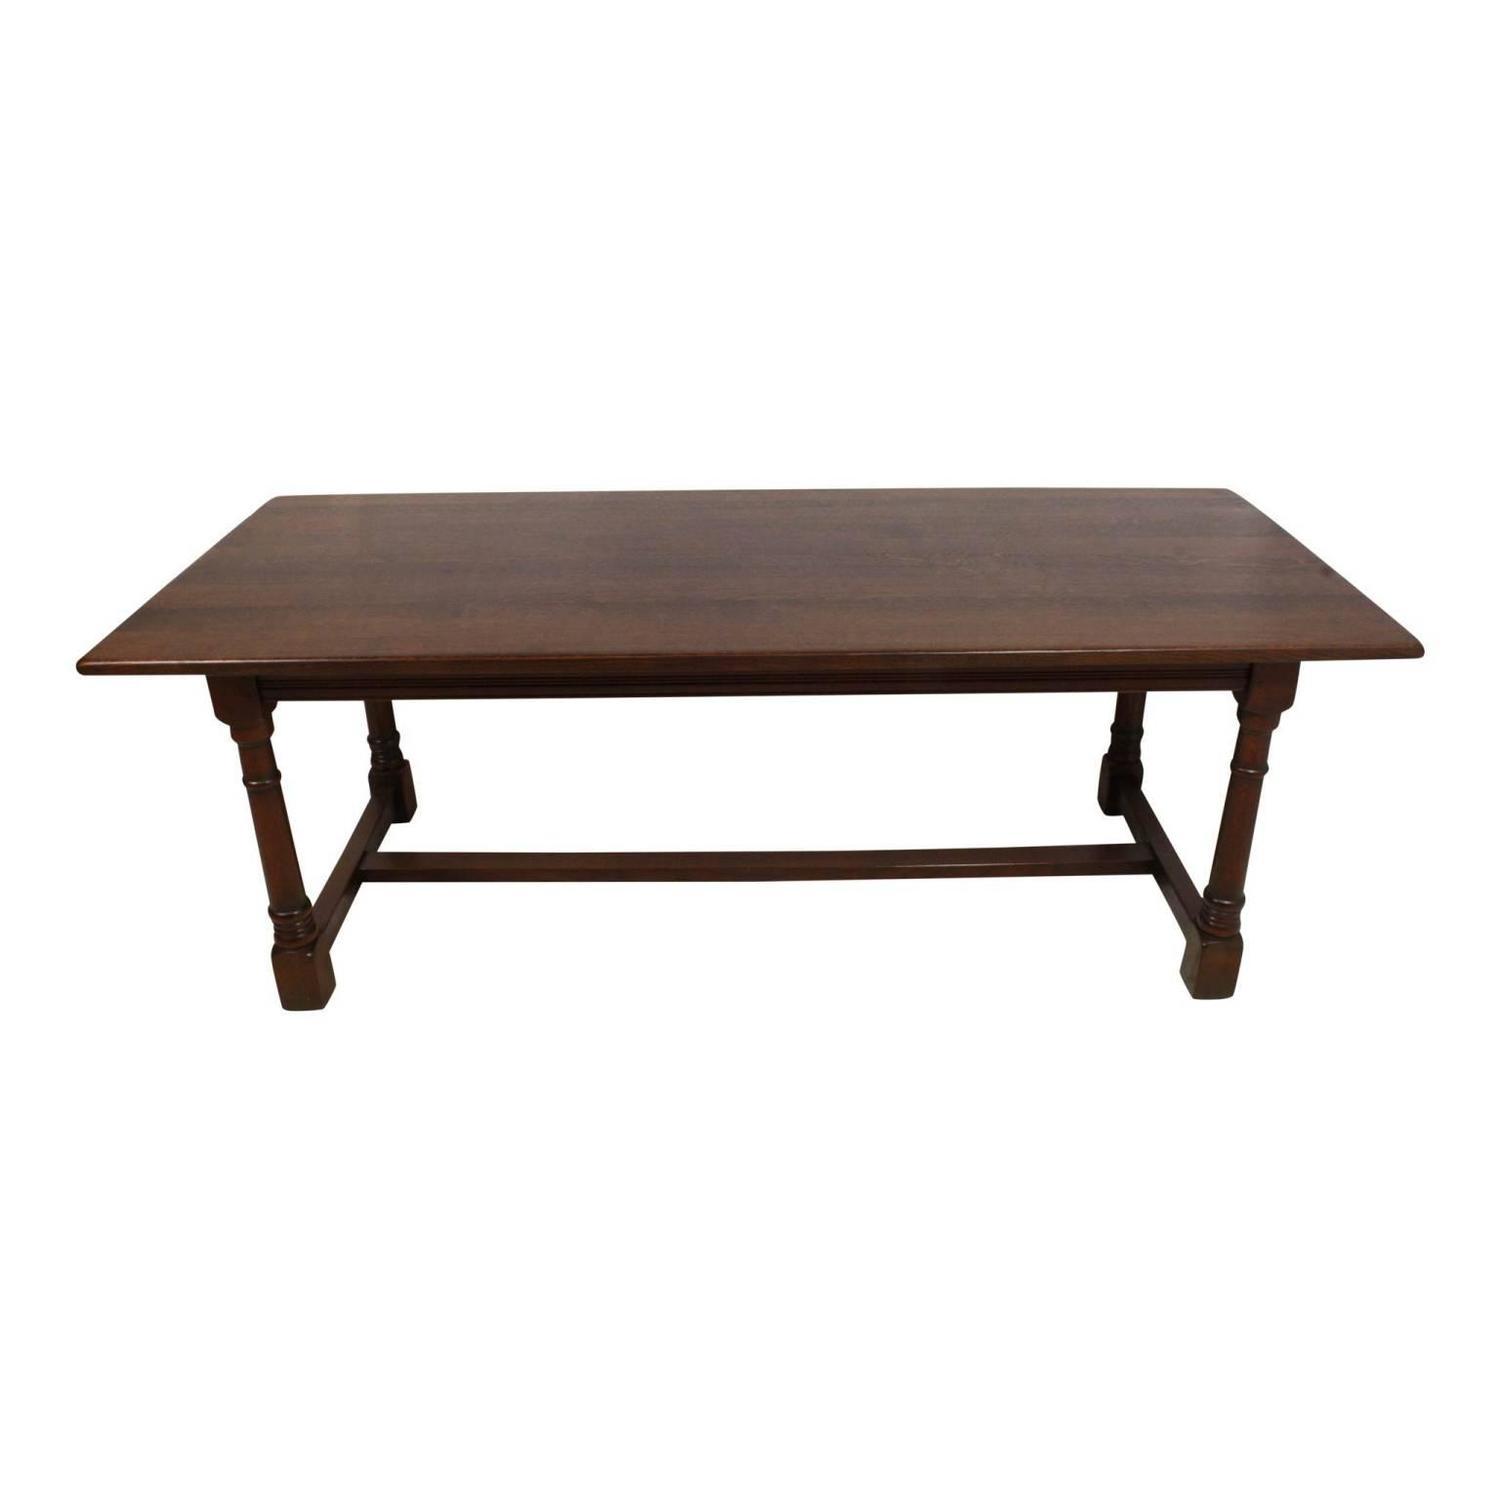  Extending Classic Furniture Rustic Oak Dining Table. Filmesonline.co